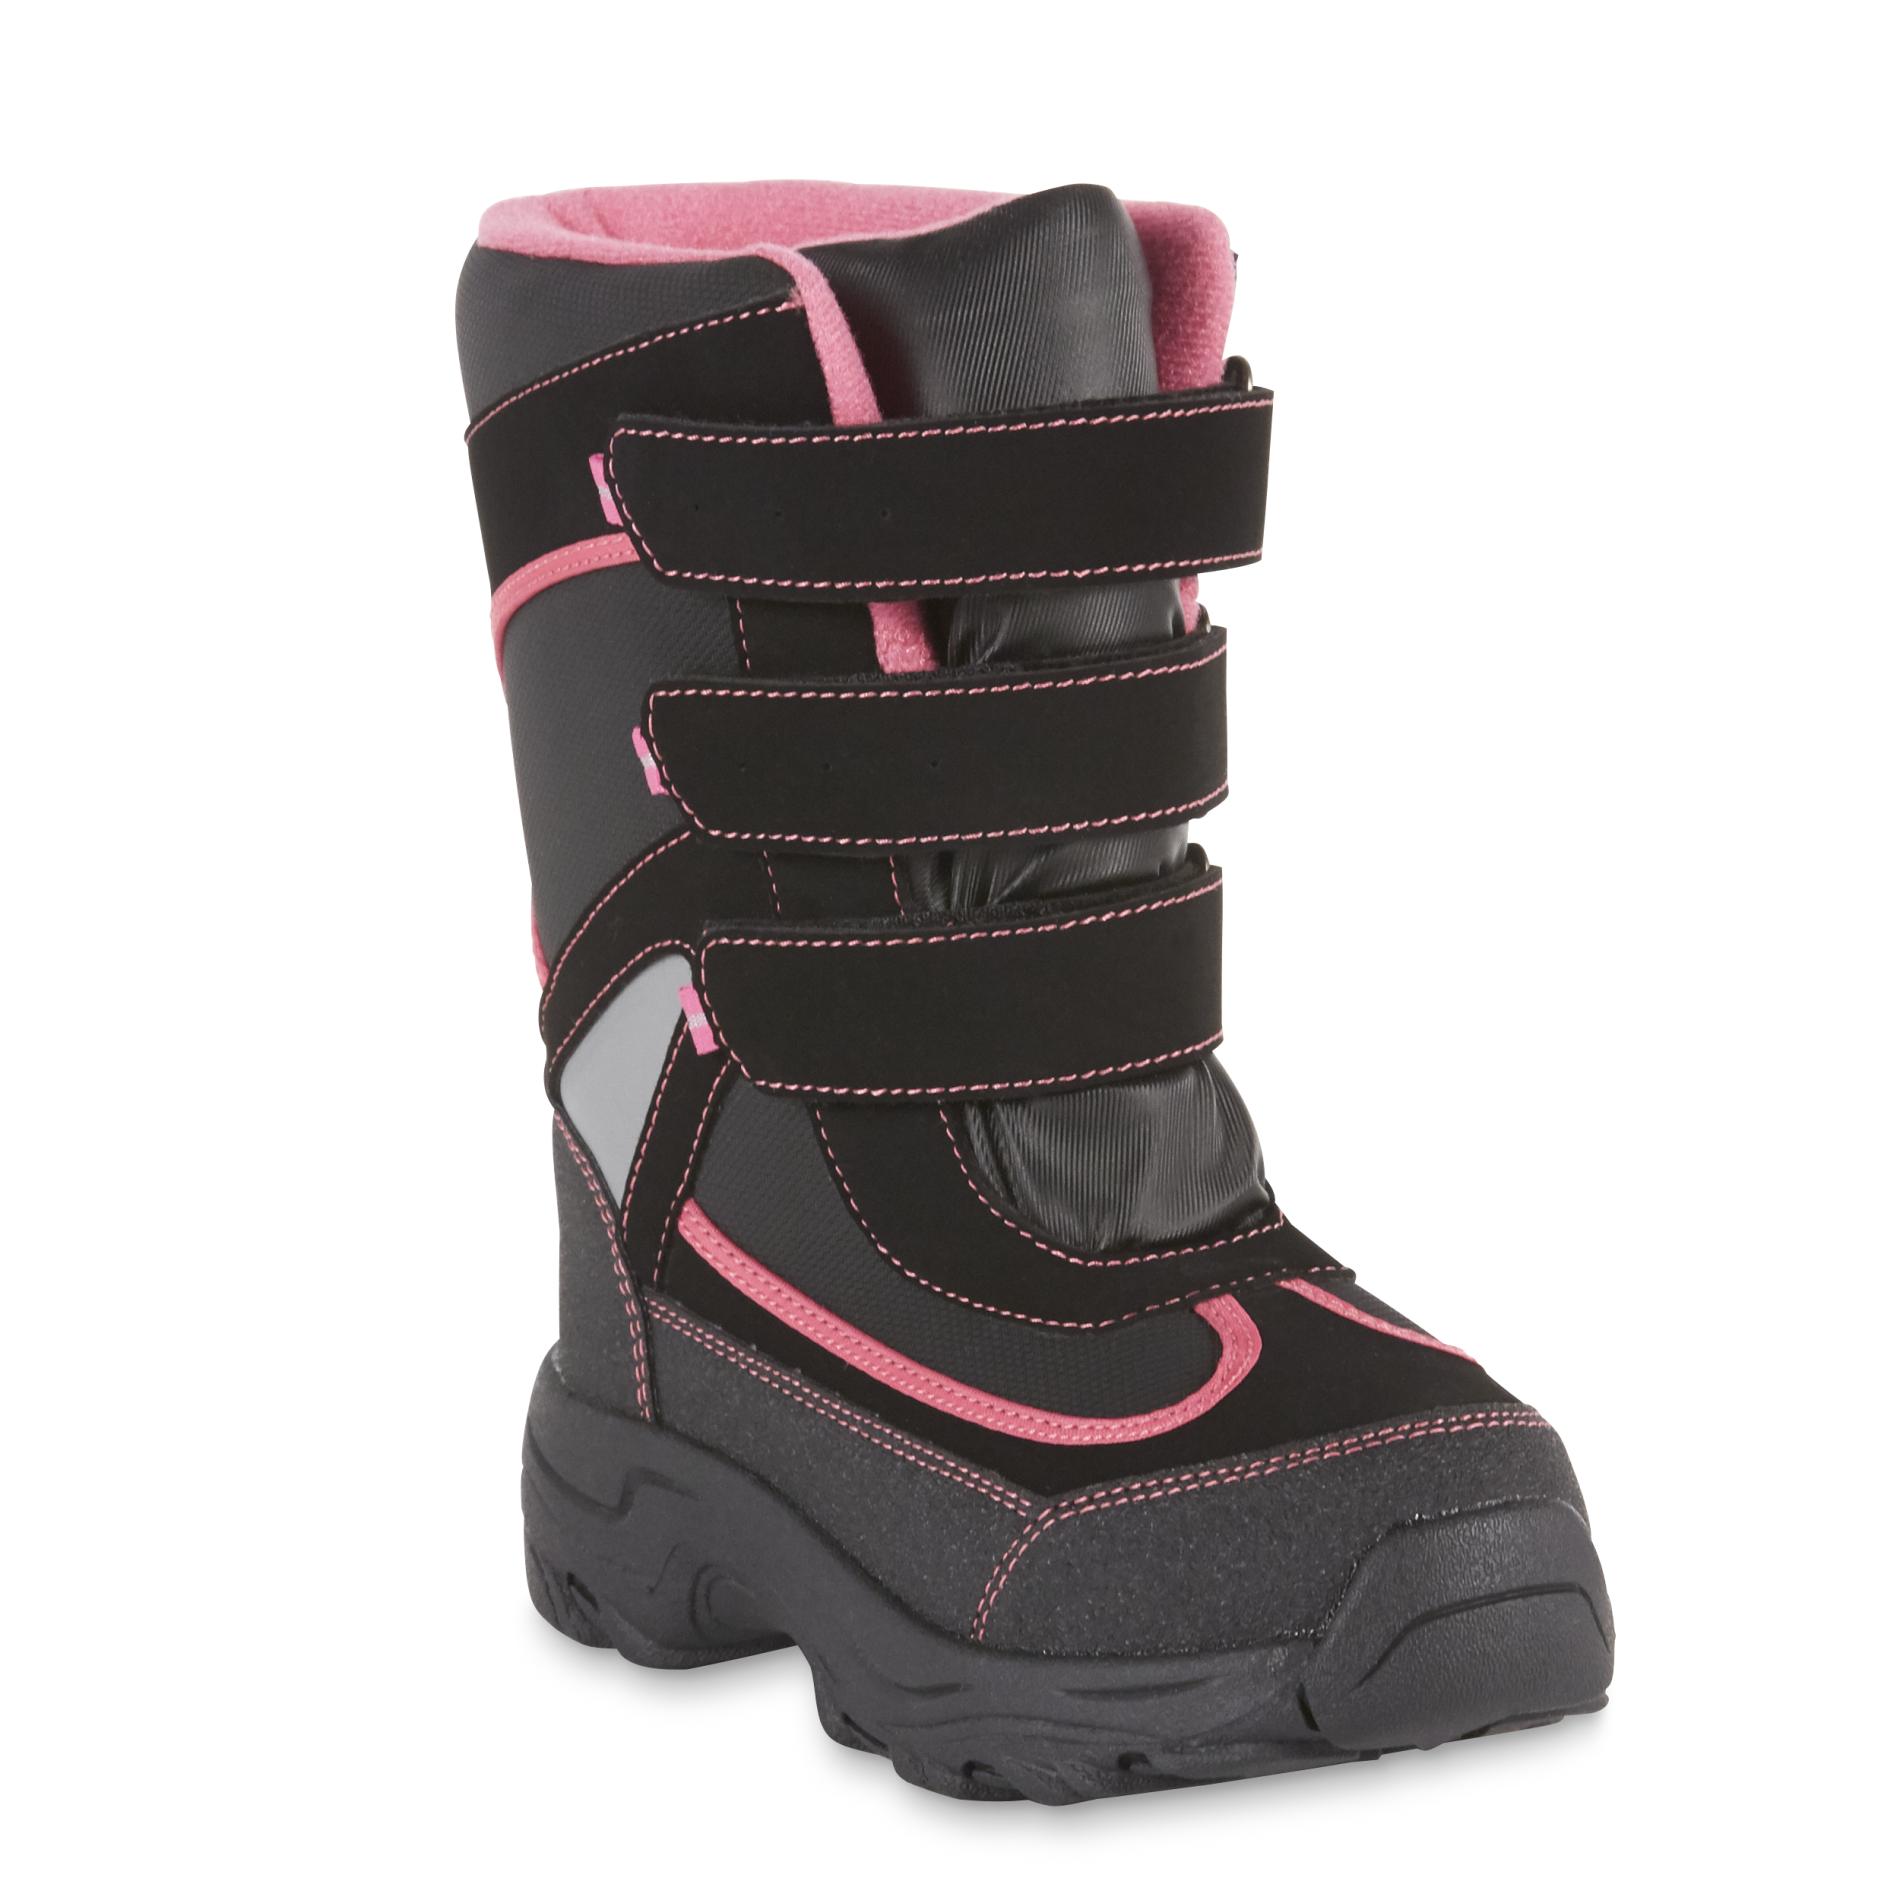 Athletech Girls' Black/Pink Half Pipe Snow Boot